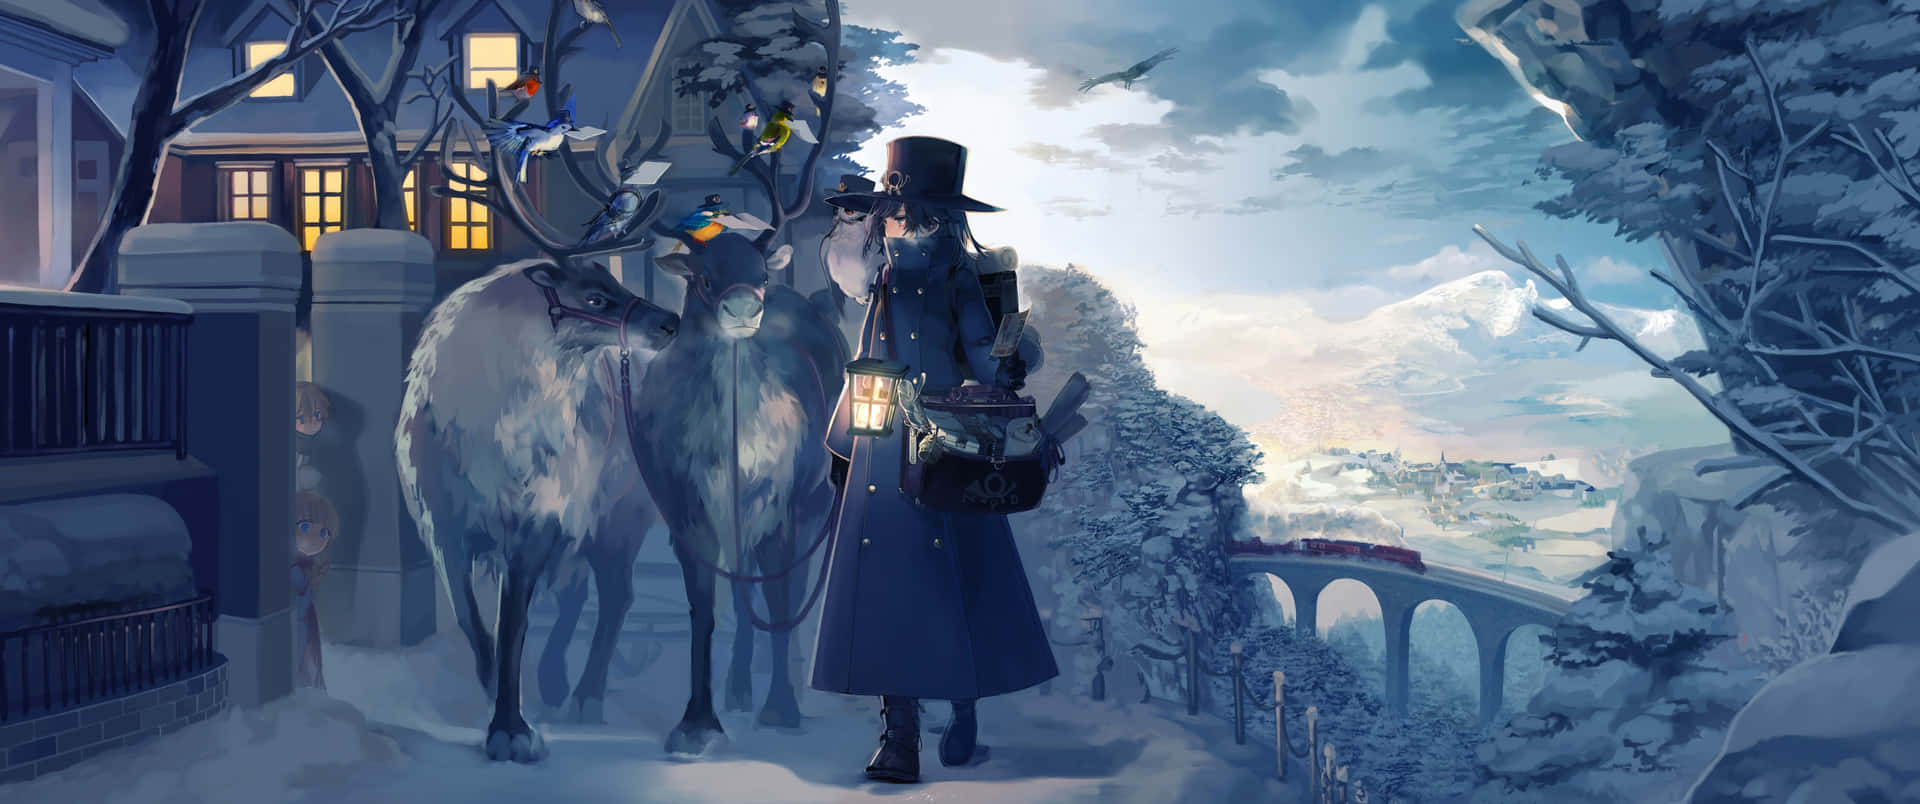 3440x1440 Anime Winter Wallpaper